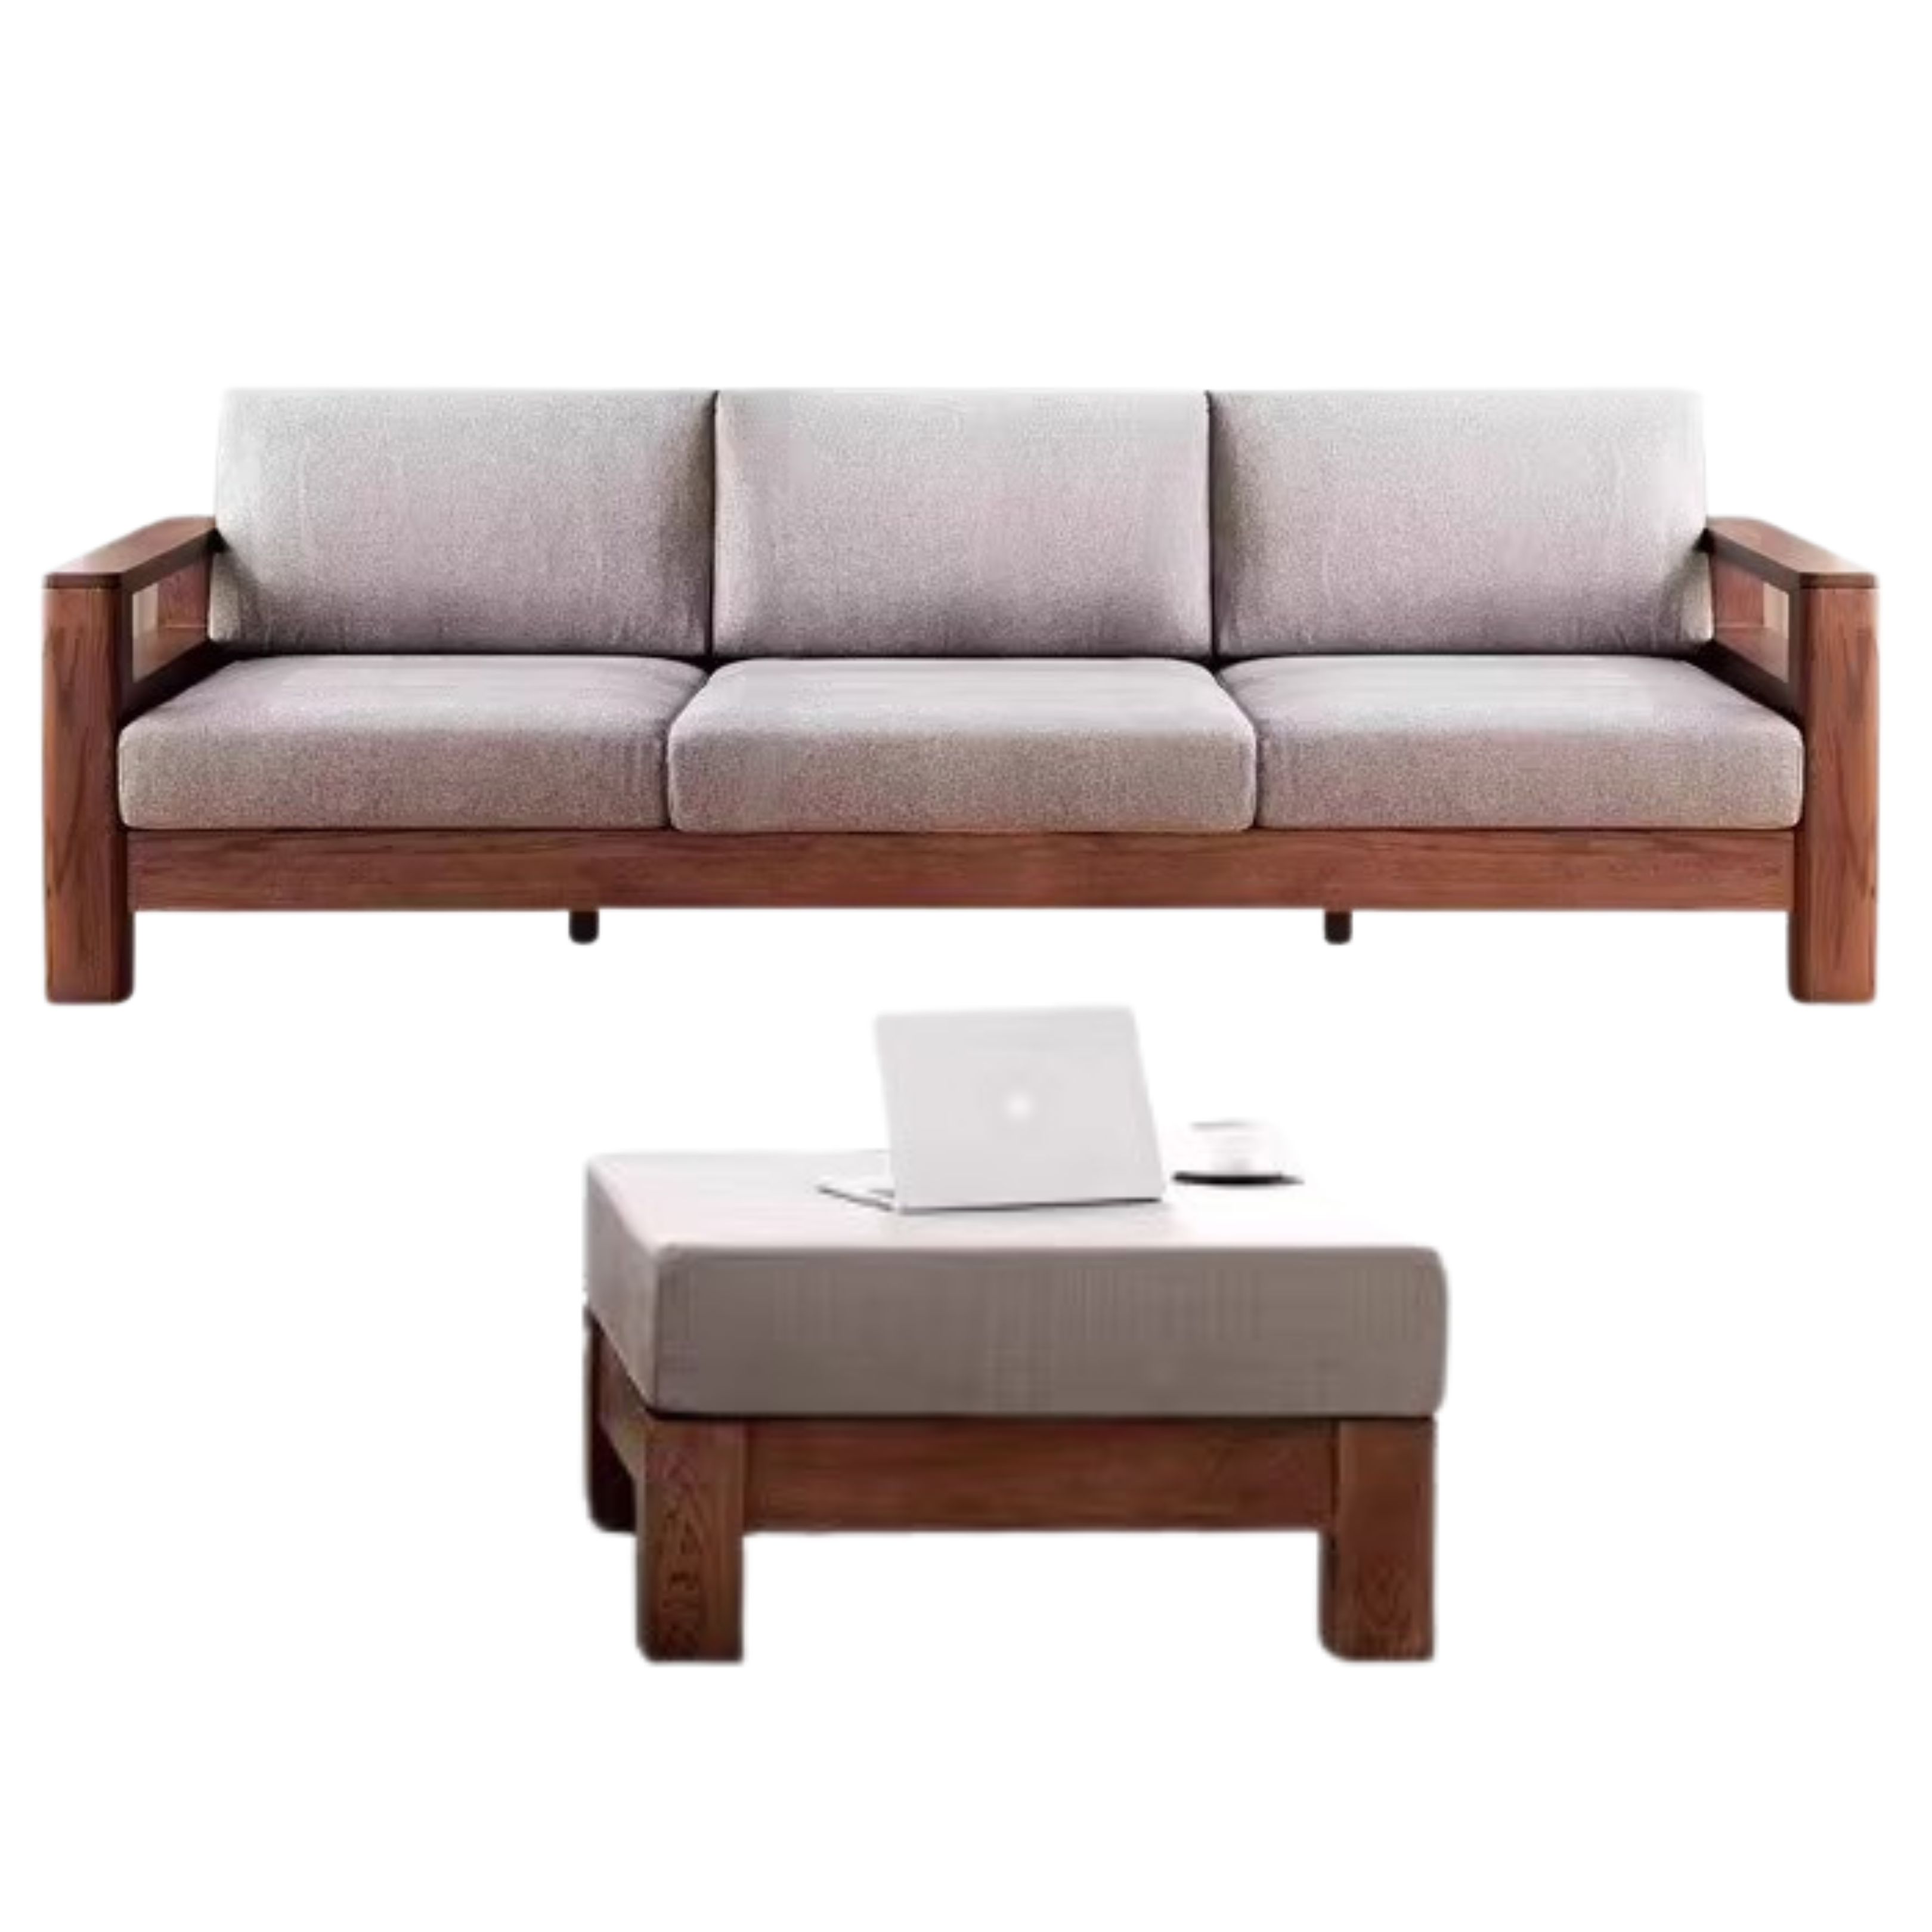 Oak solid wood walnut color fabric sofa)